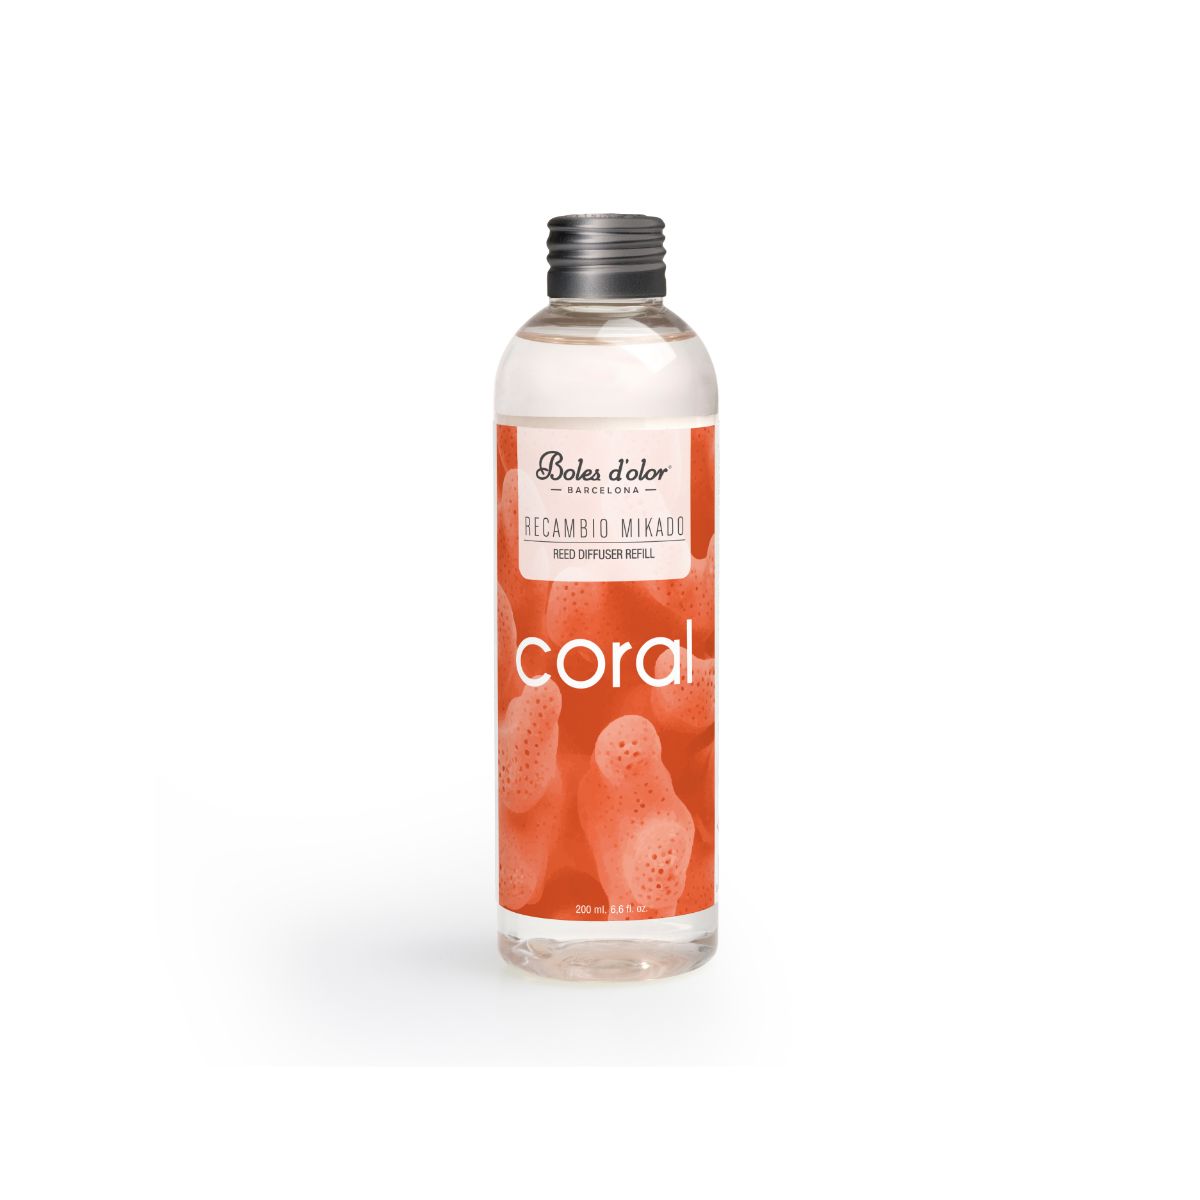 Recarga Mikado Coral c/Varetas de Vime Boles d'olor